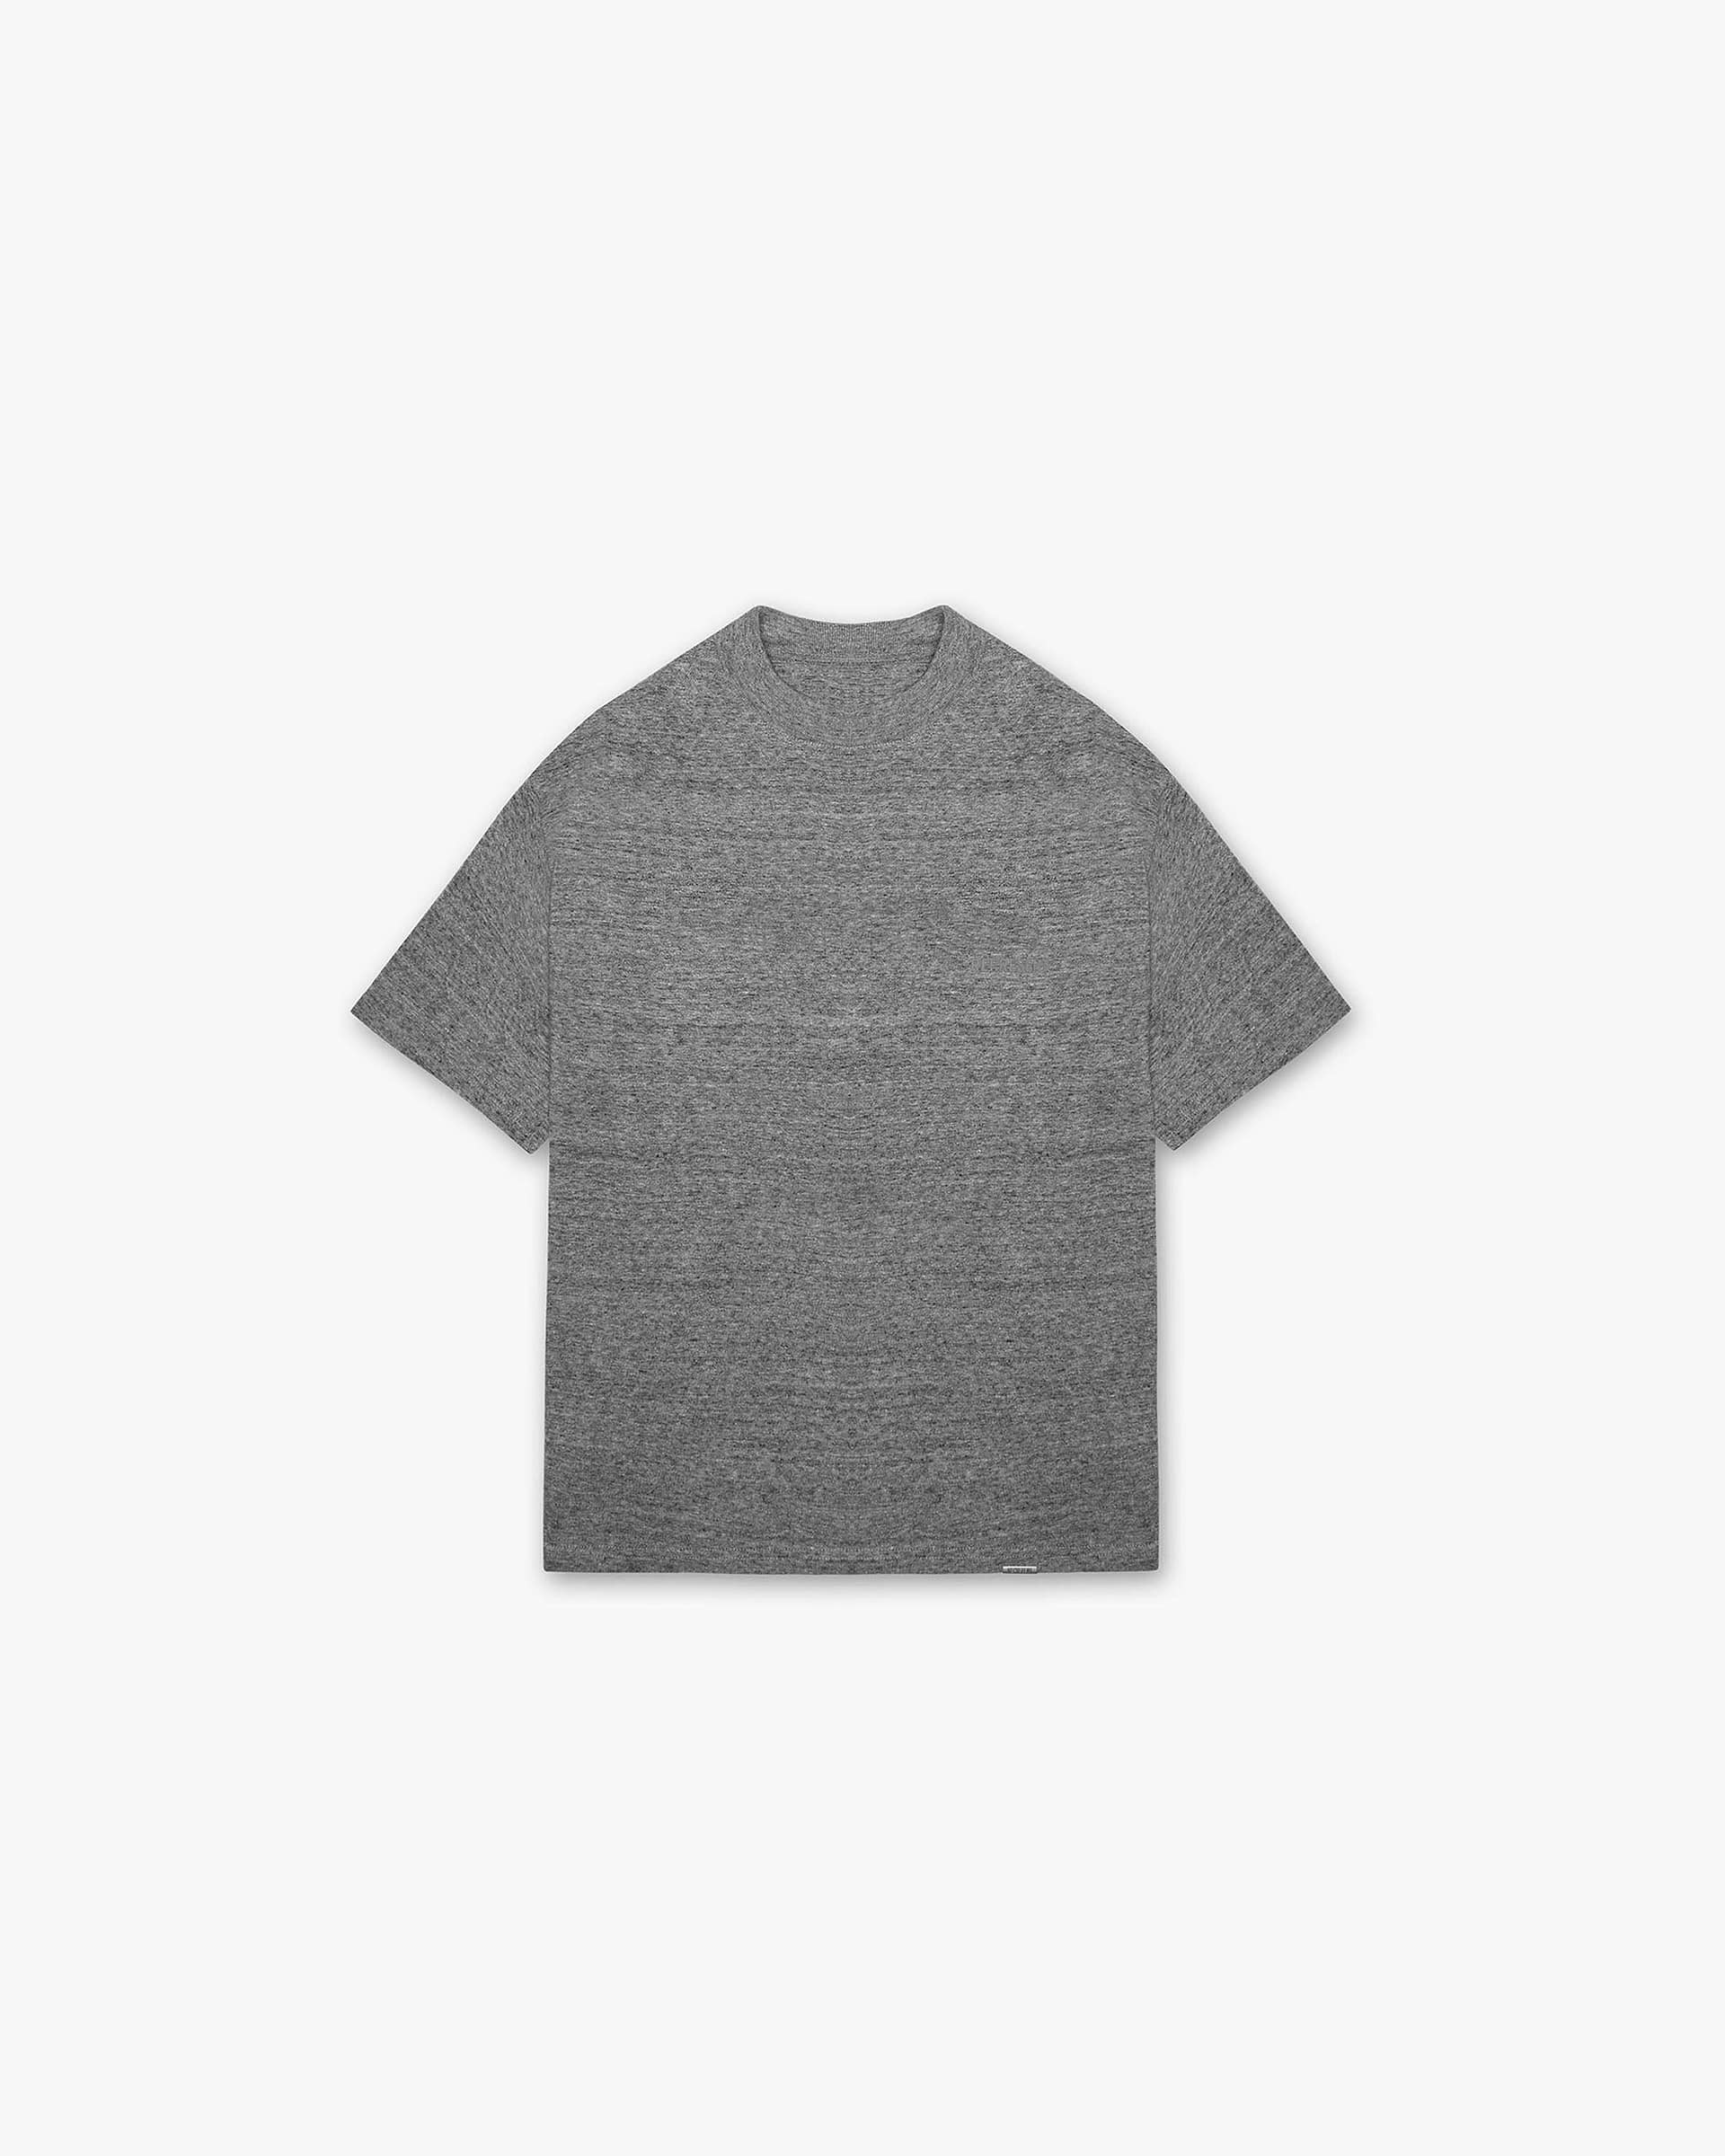 Blank T-Shirt - Slate